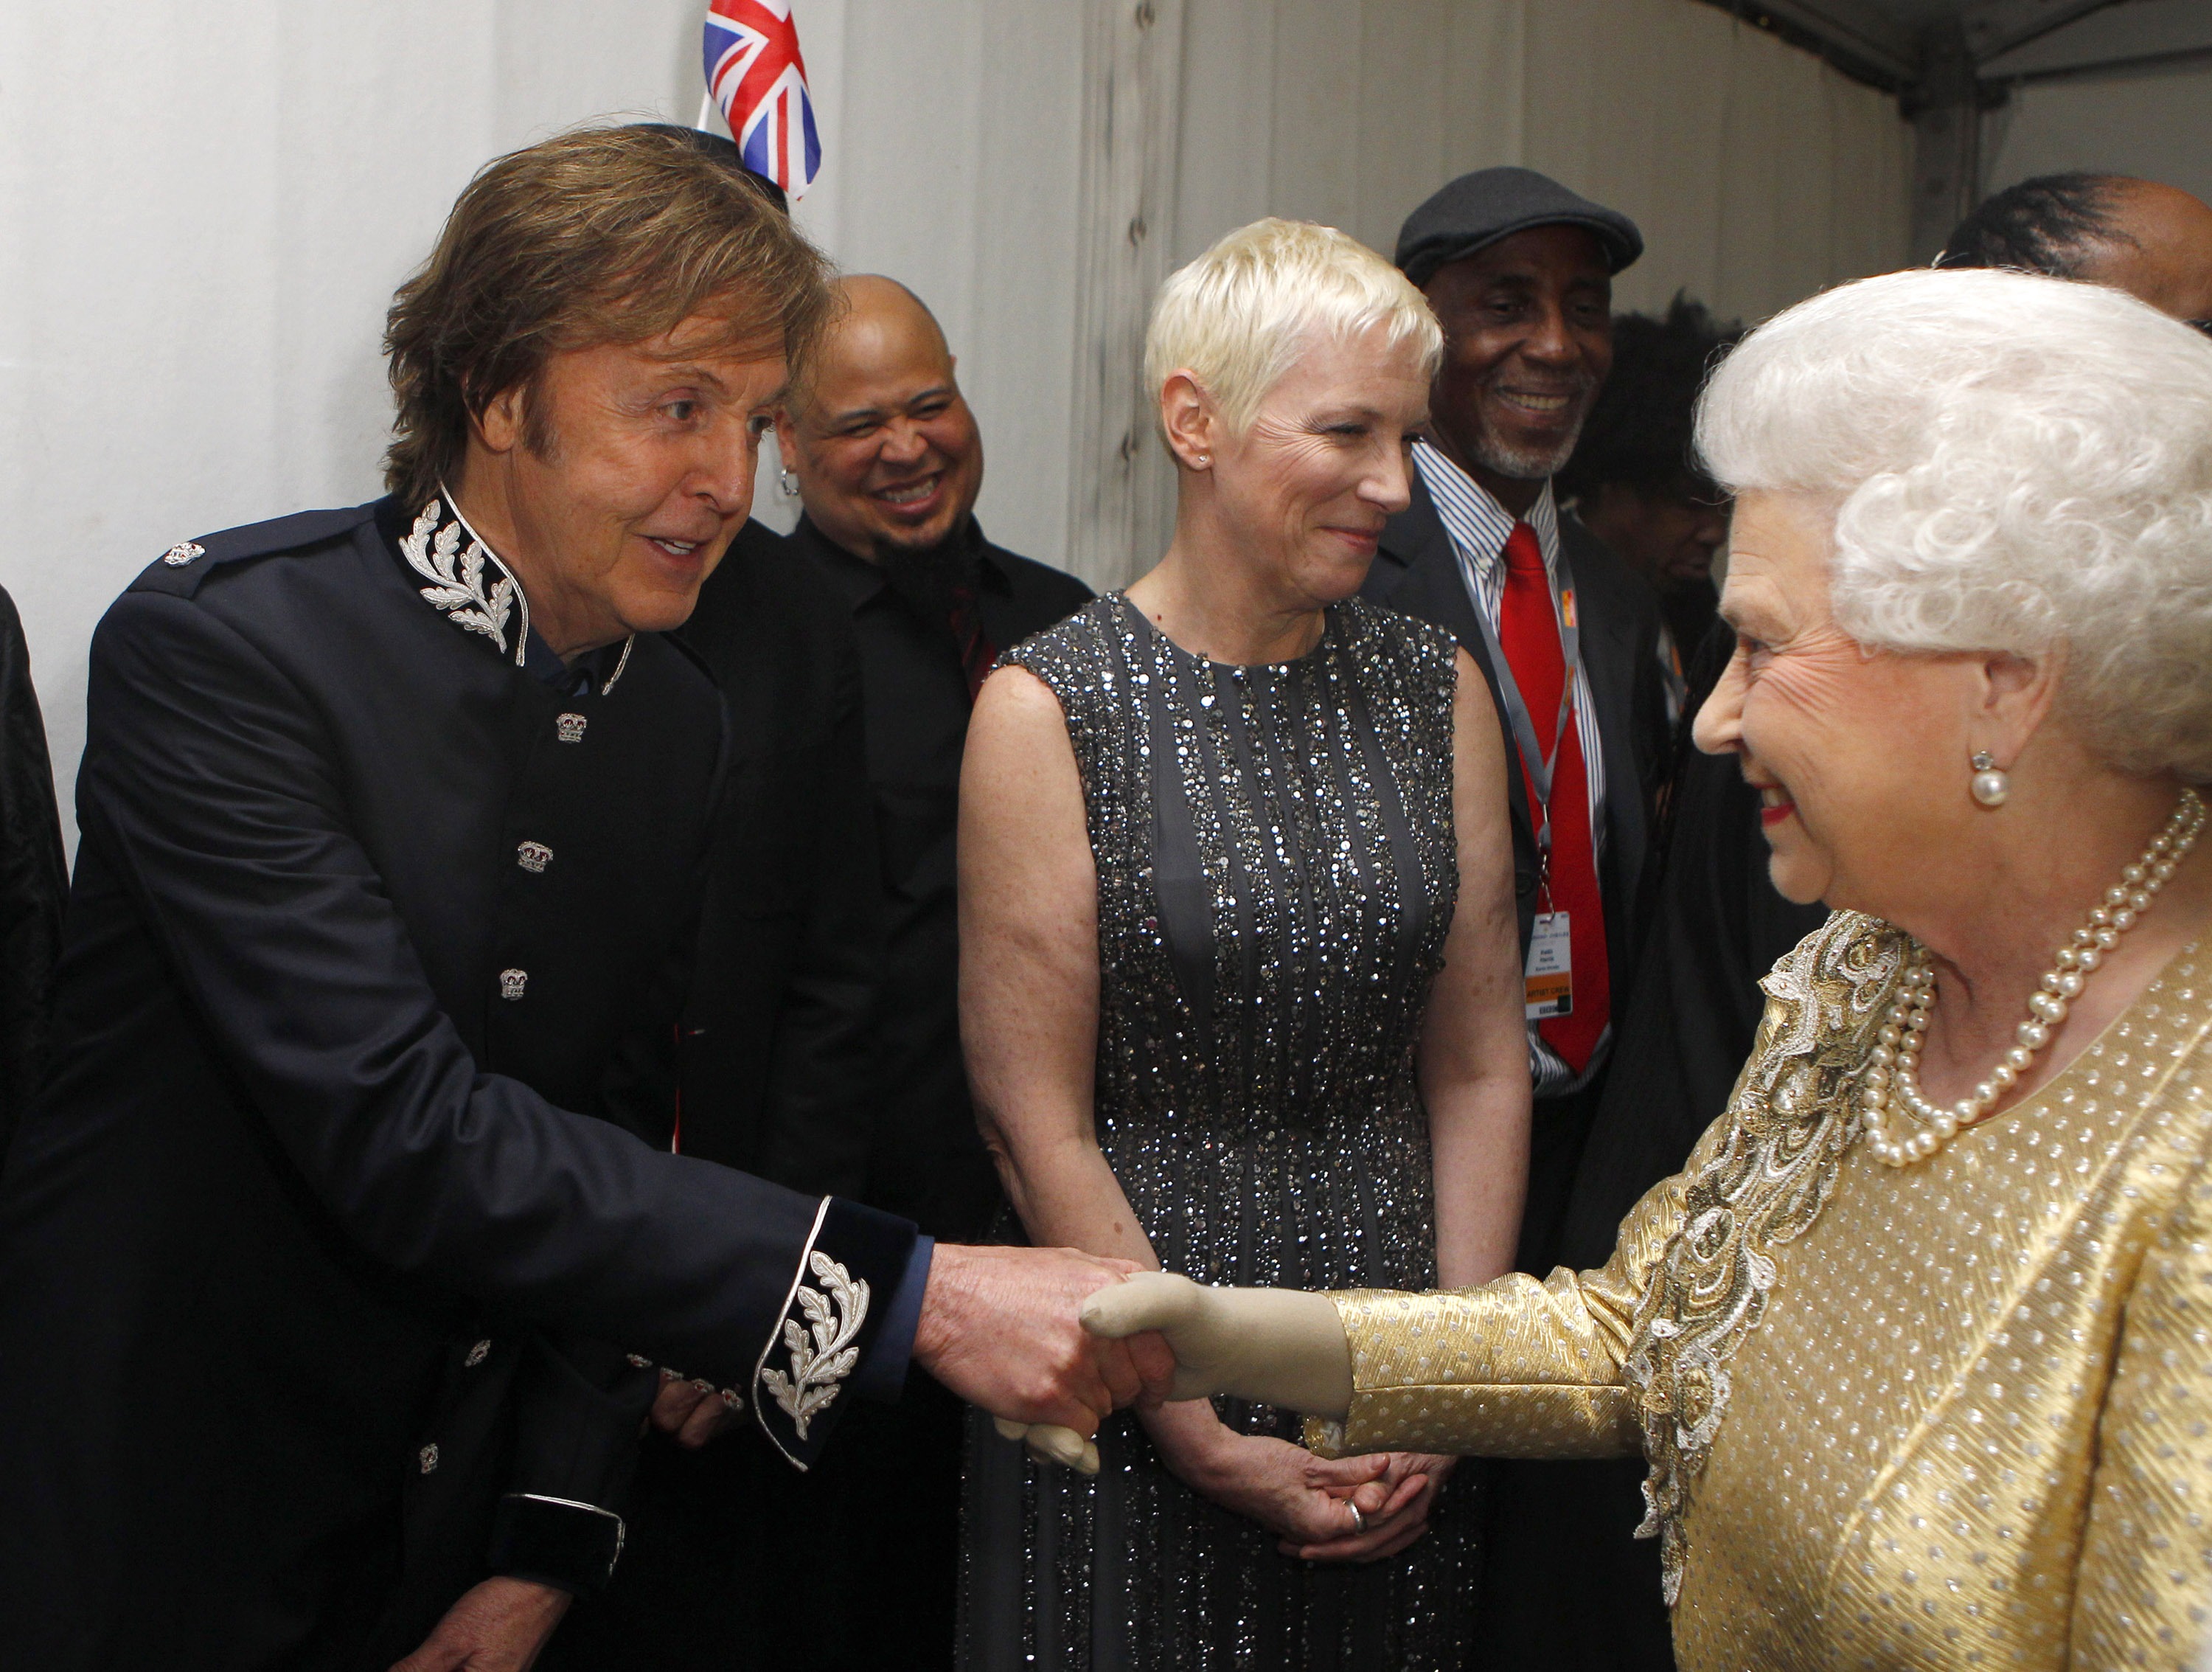 Queen Elizabeth II shaking hands with Paul McCartney in front of Annie Lennox